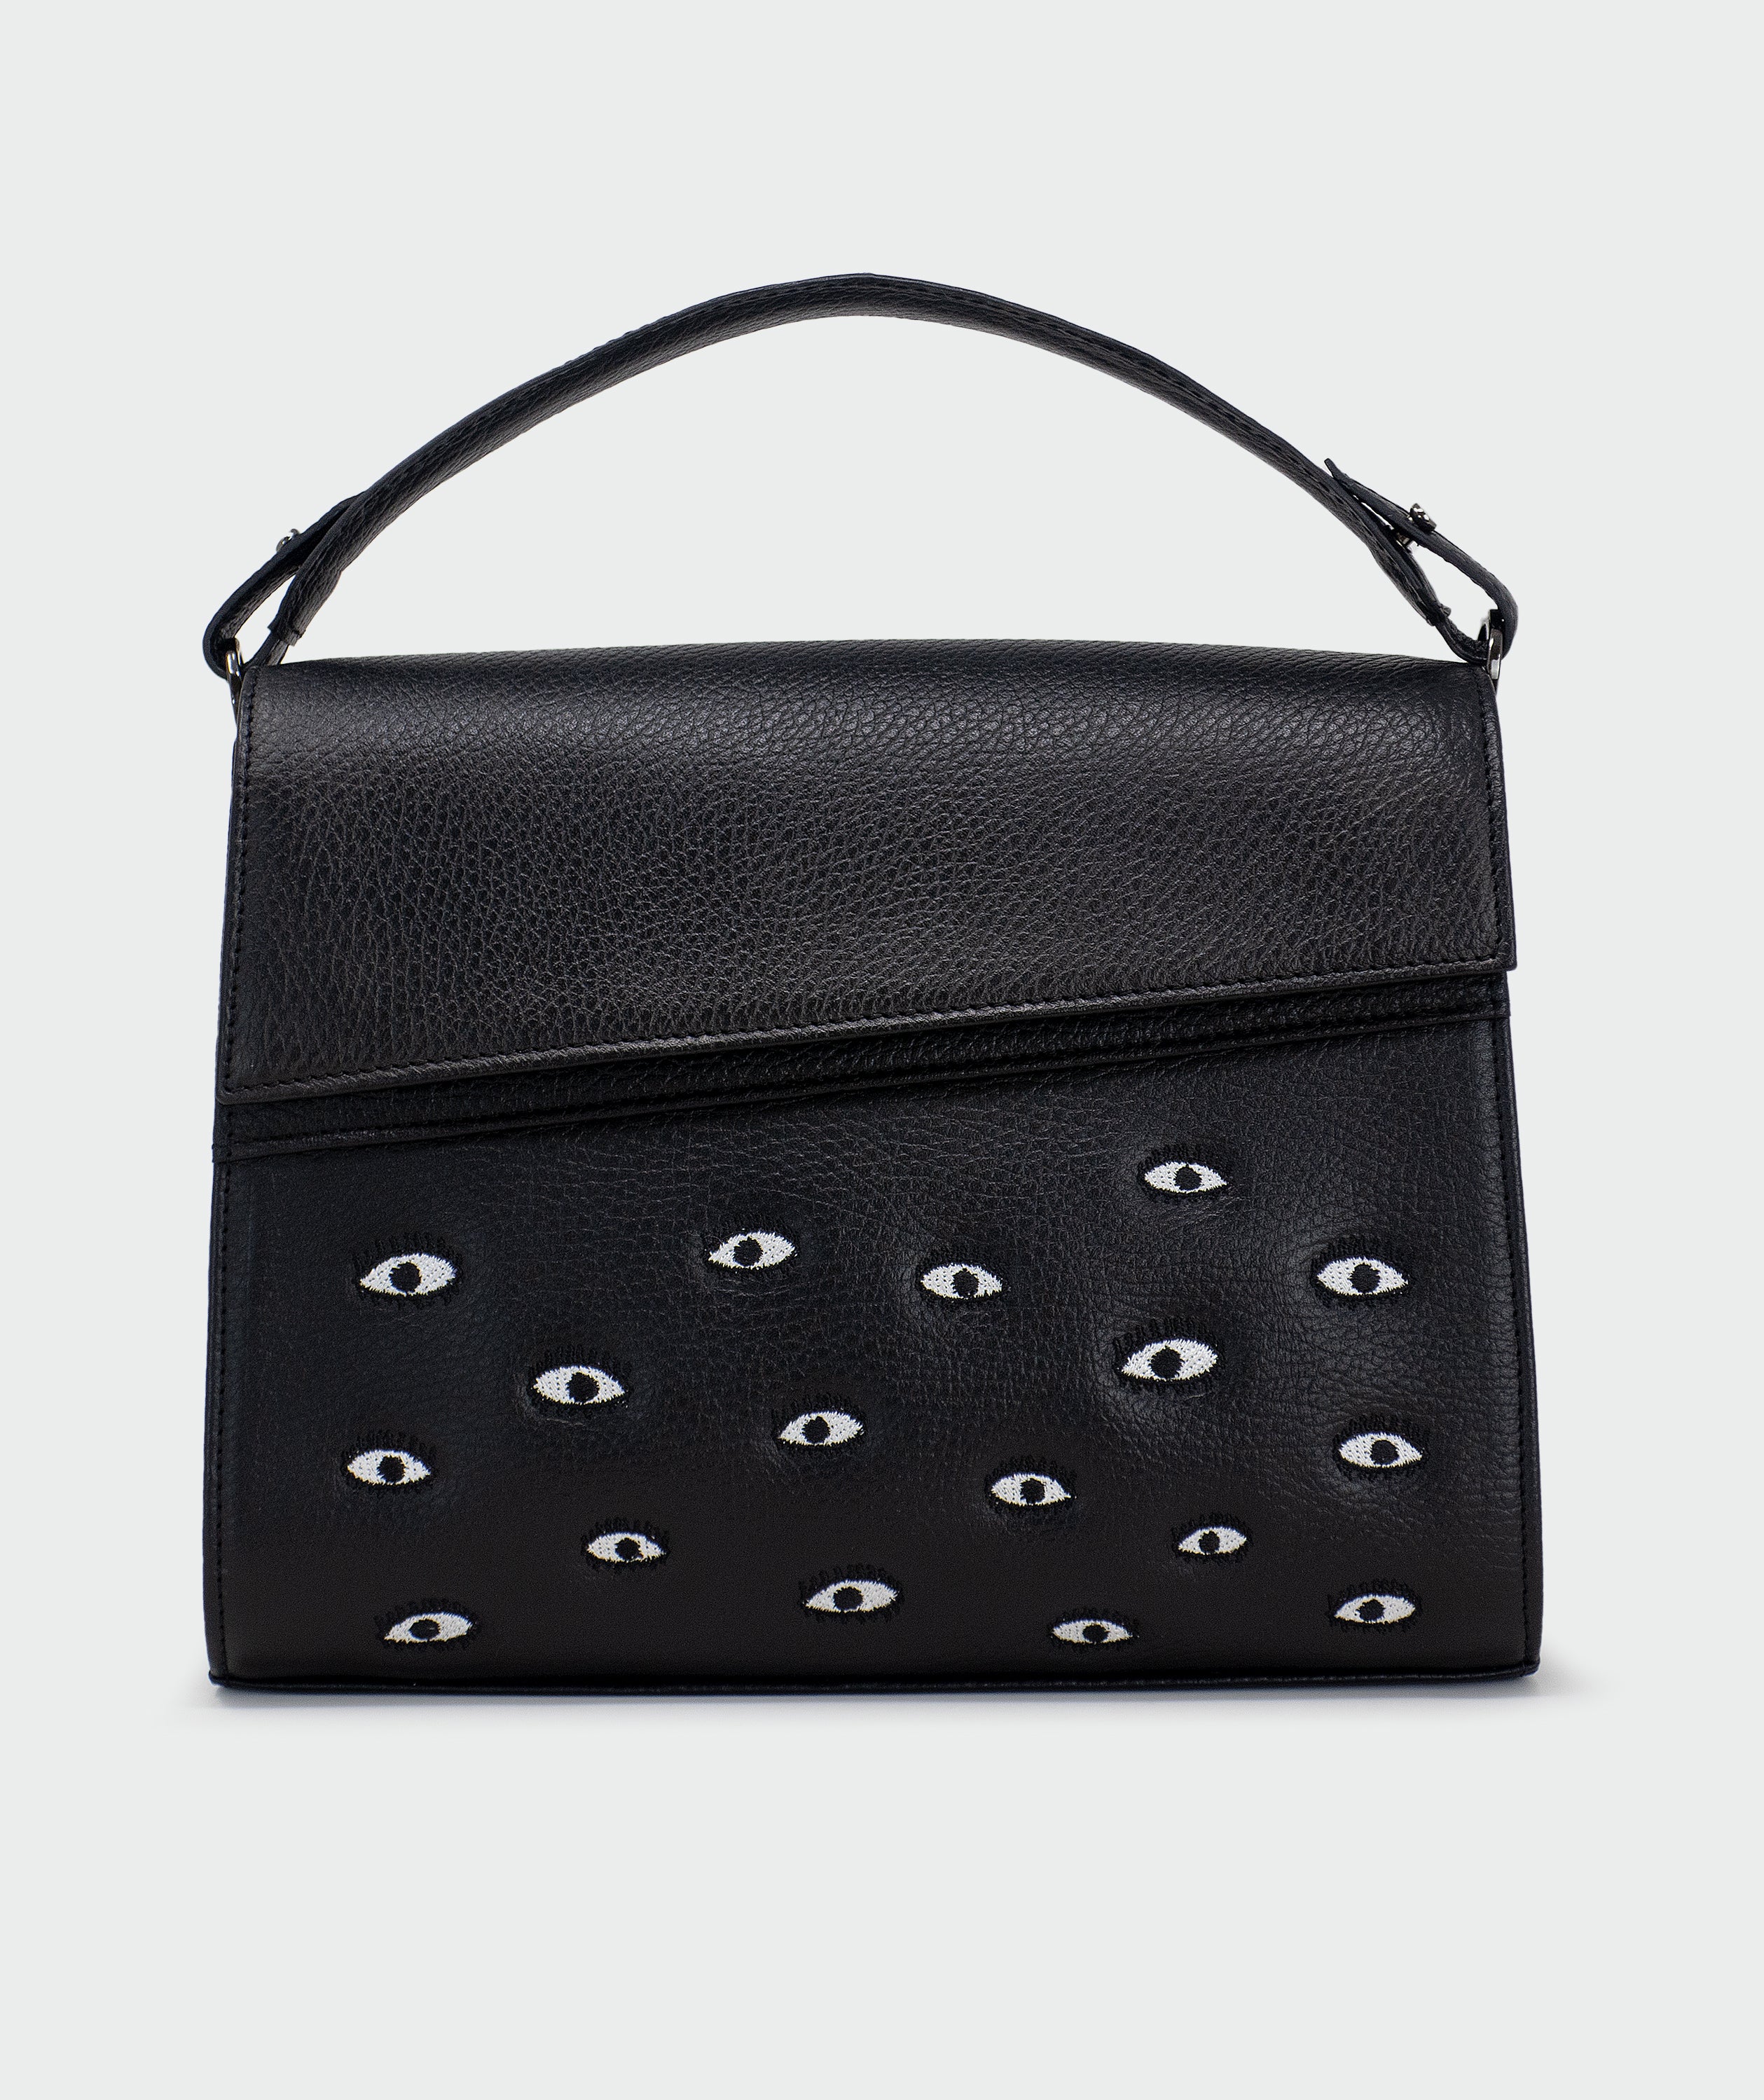 Anastasio Medium Crossbody Handbag Black Leather - Eyes Embroidery - Front view